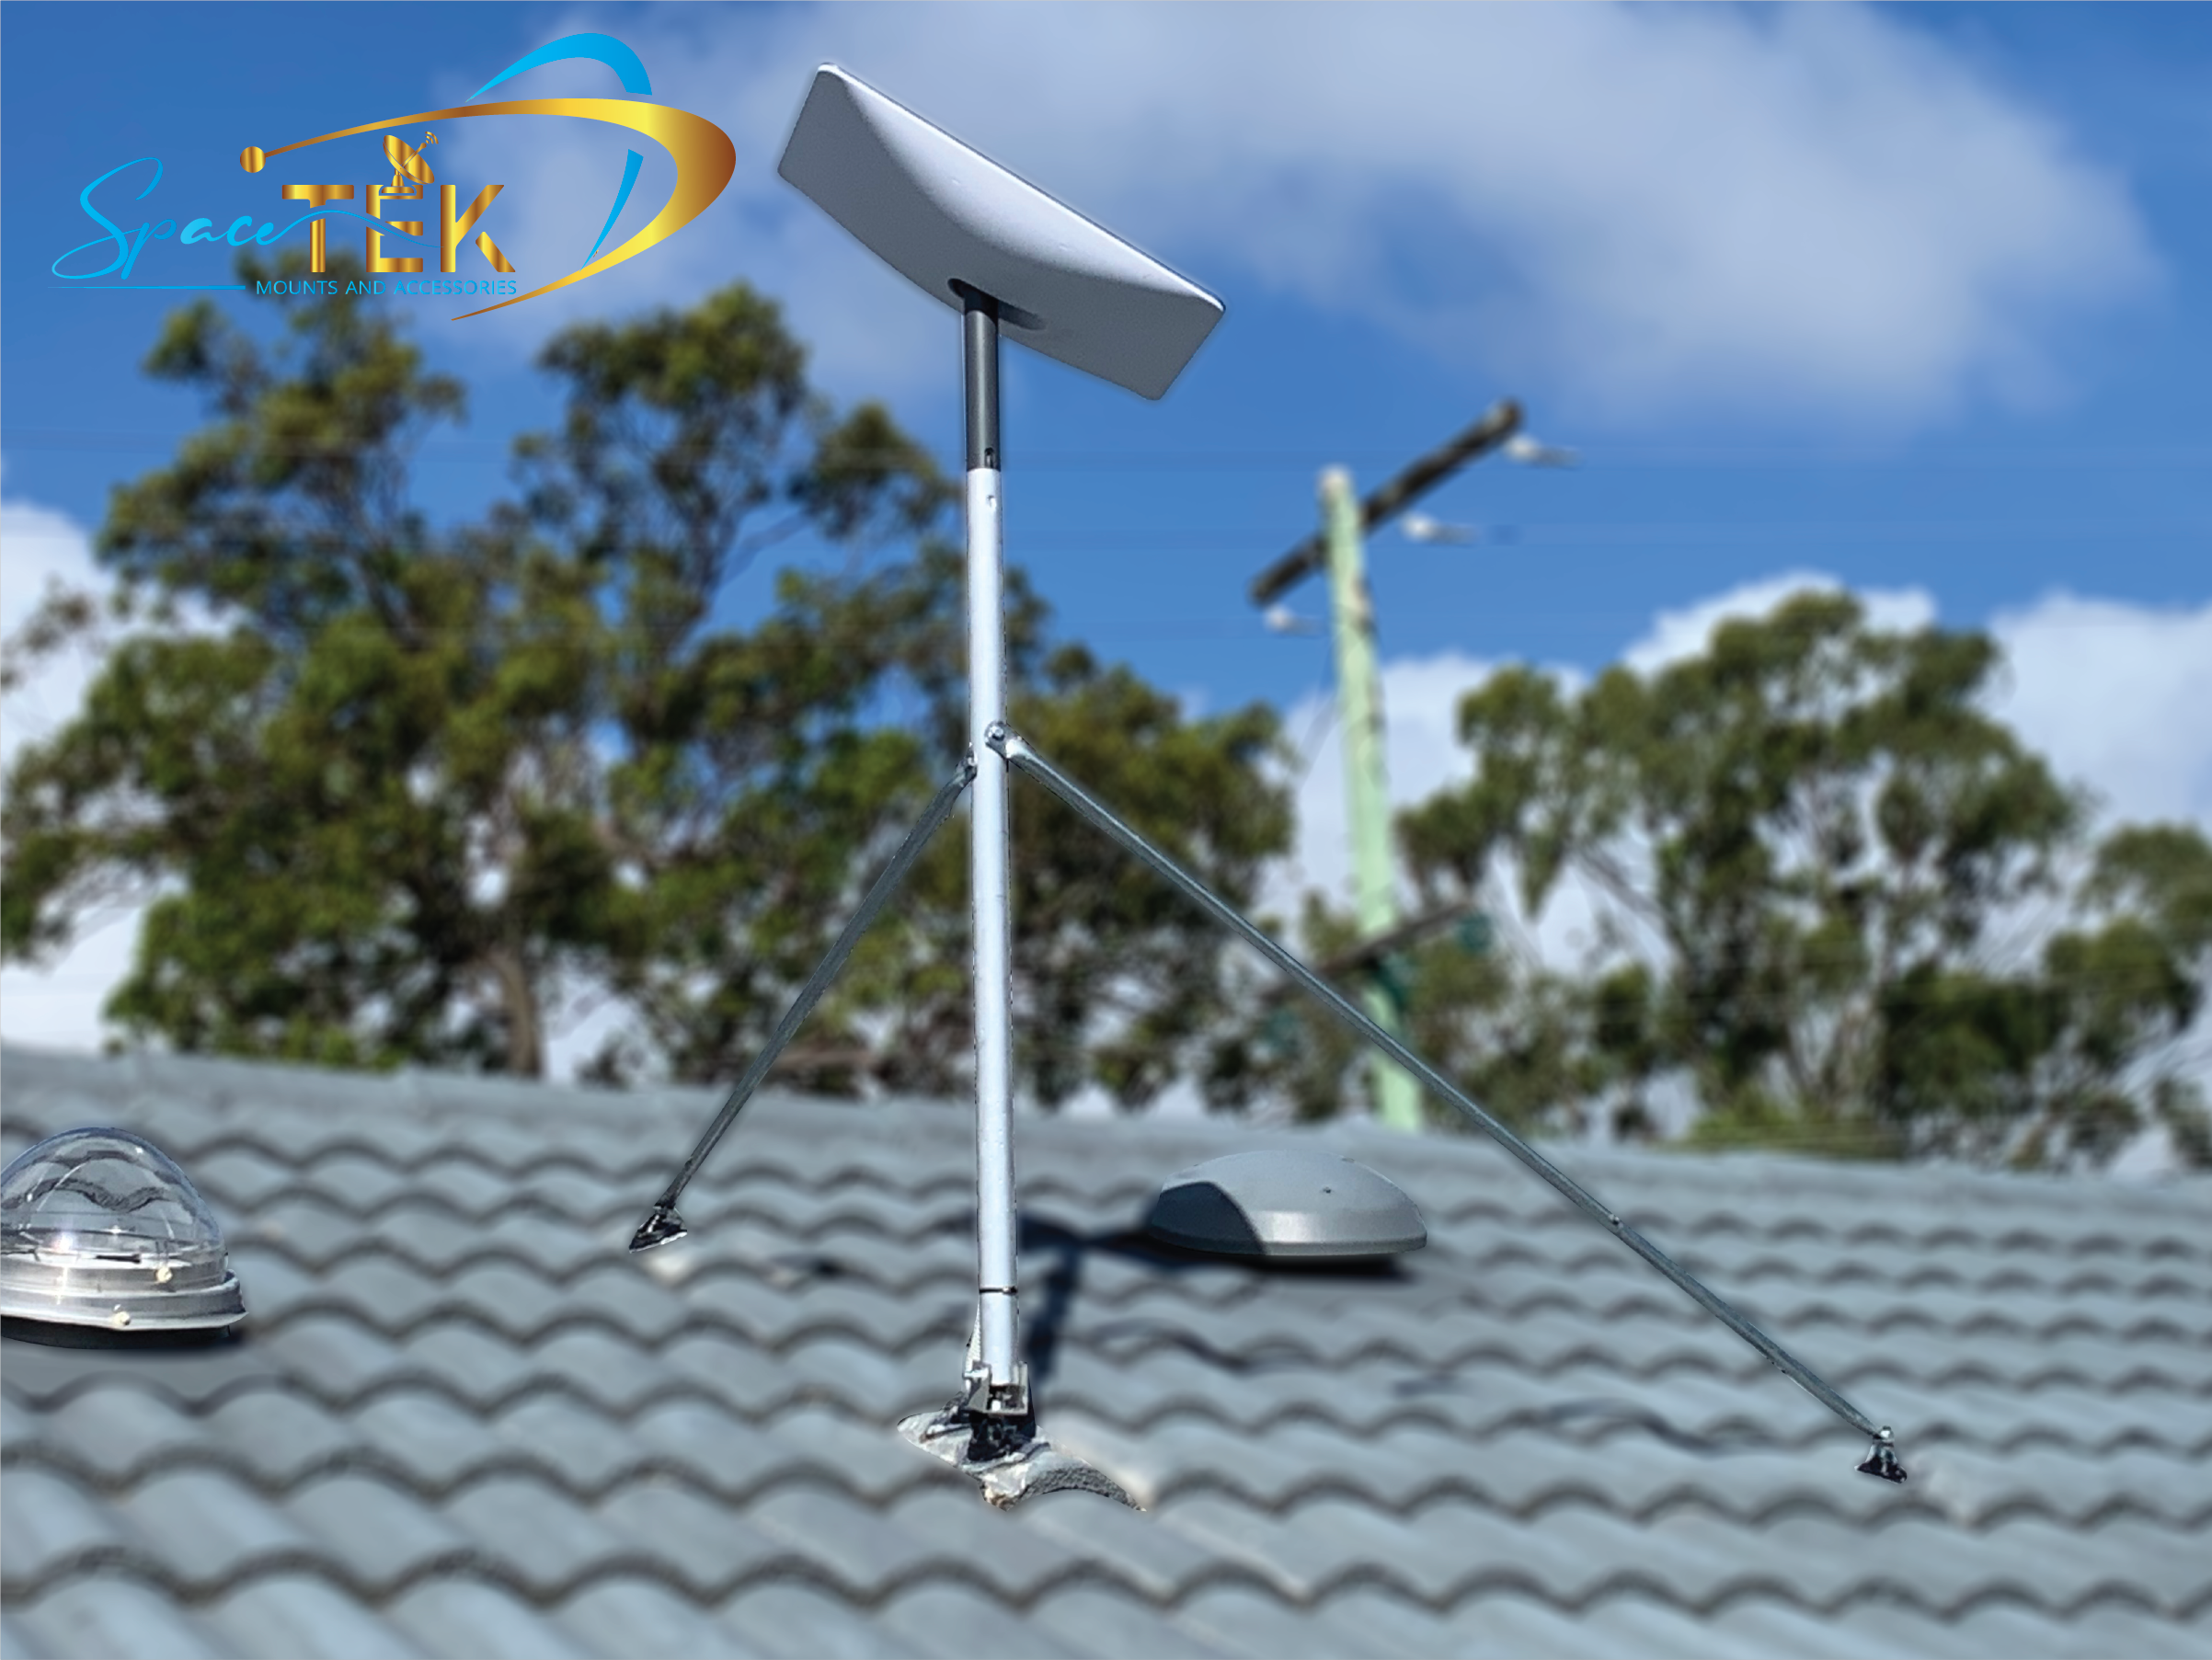 Tile Roof - Starlink Mount Roof Kit for Dishy - Rectangle Gen 2